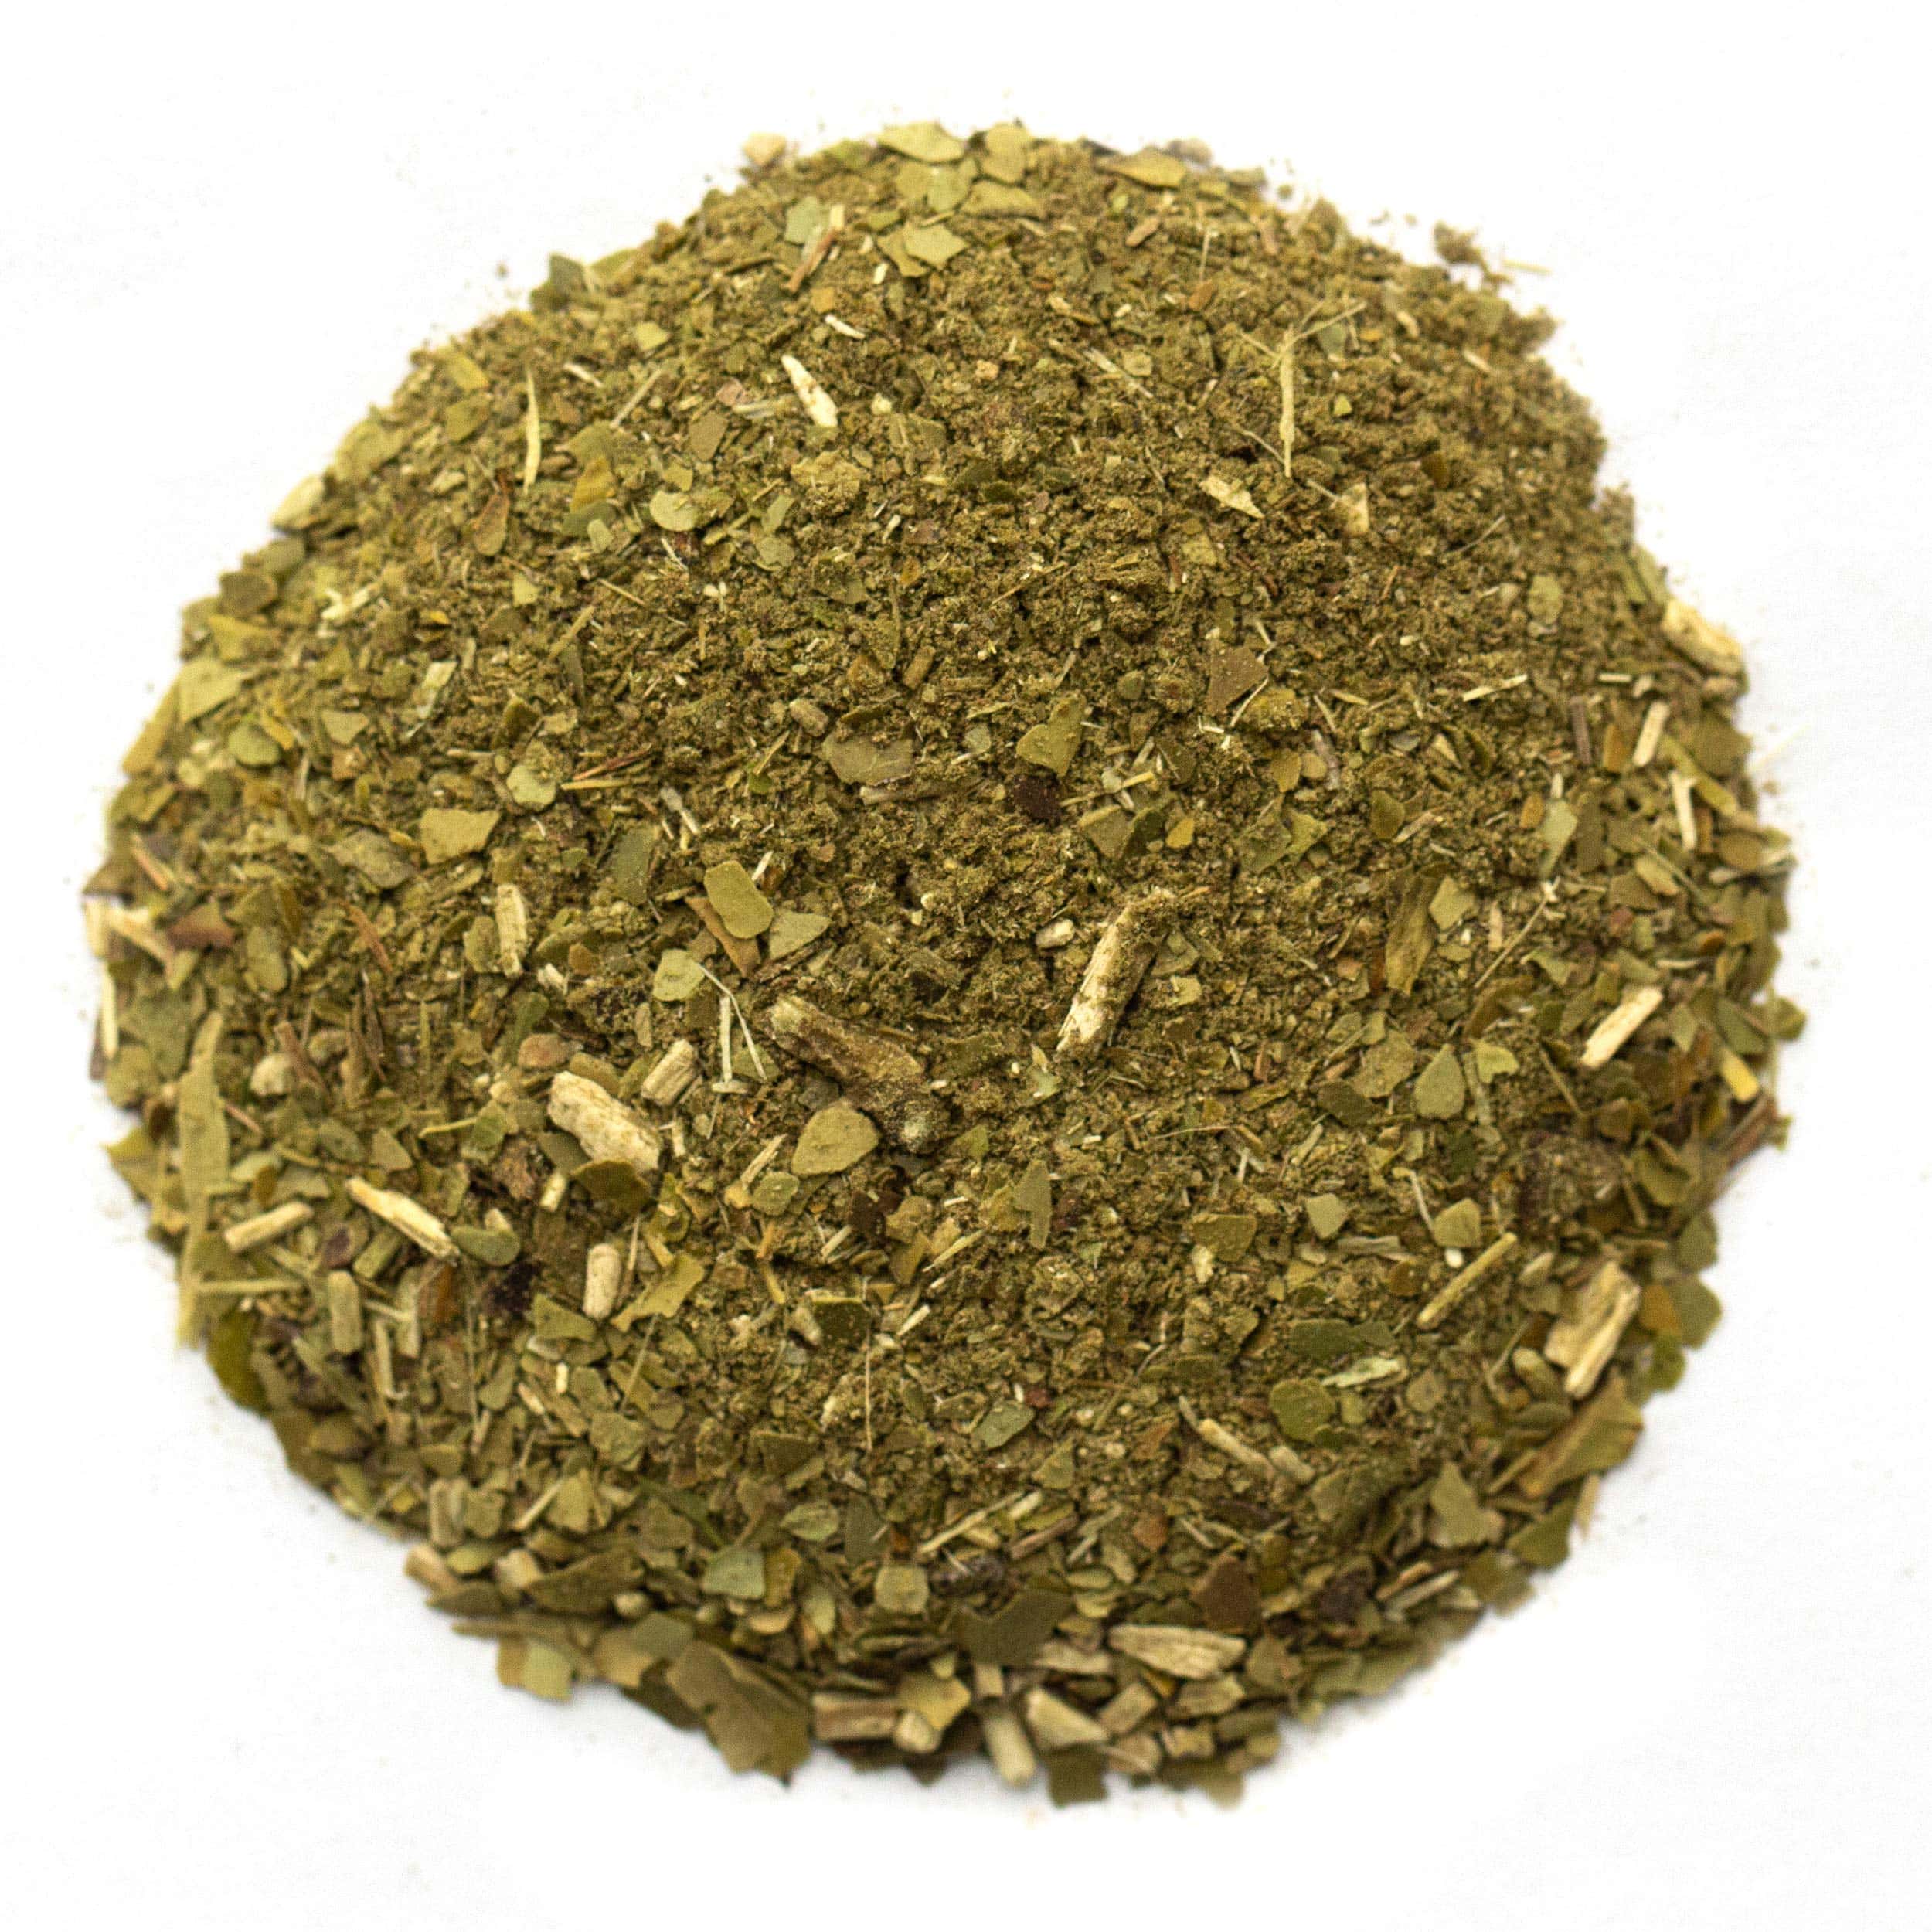 Green Yerba Mate Loose Leaf Tea - Green, Earthy, Classic